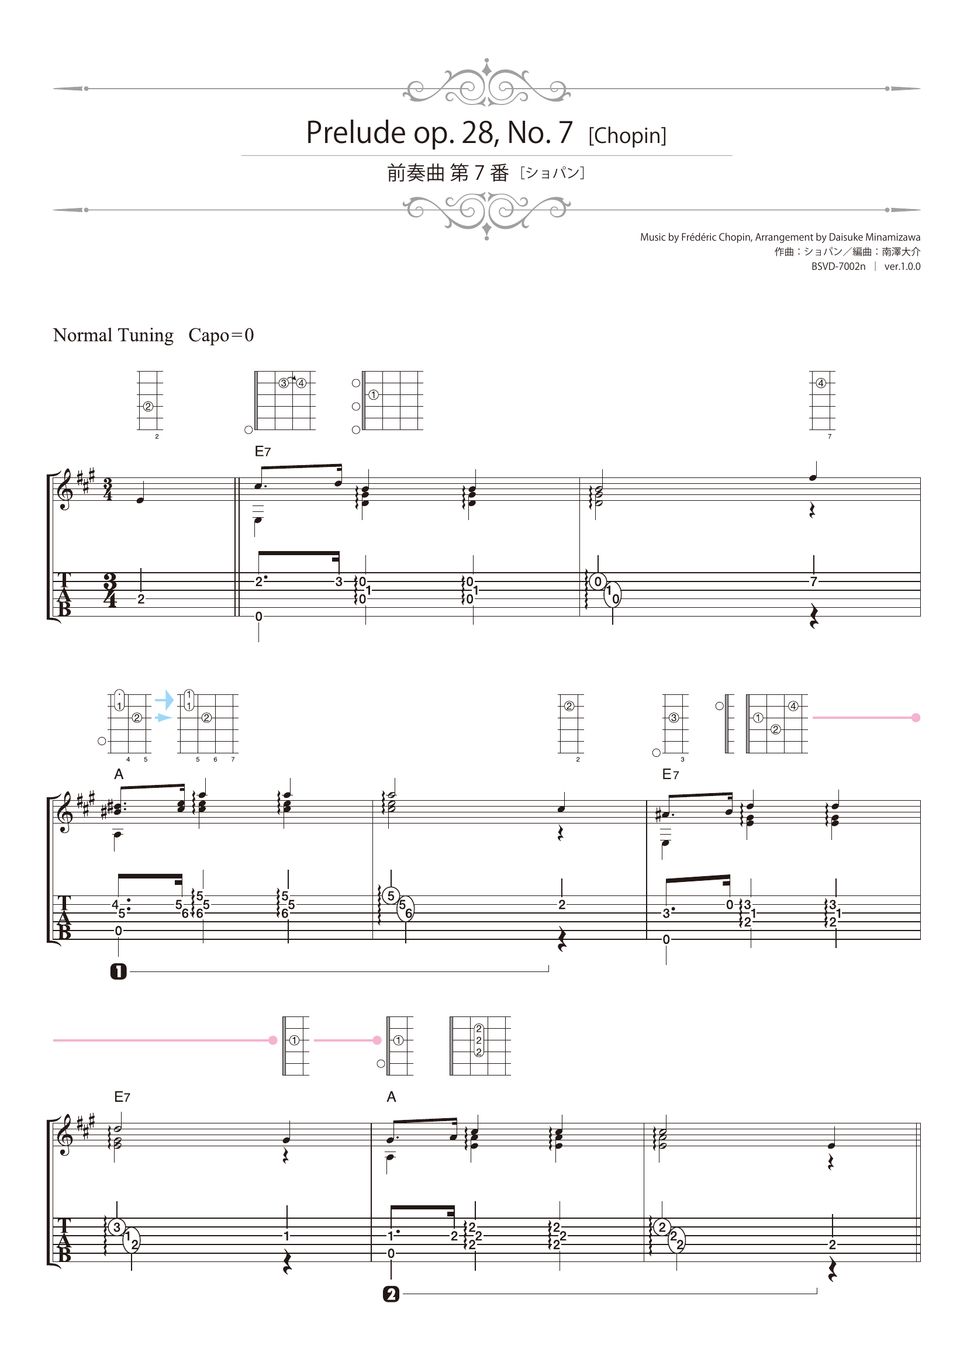 Chopin - Prelude op. 28, No. 7 (Solo Guitar) by Daisuke Minamizawa